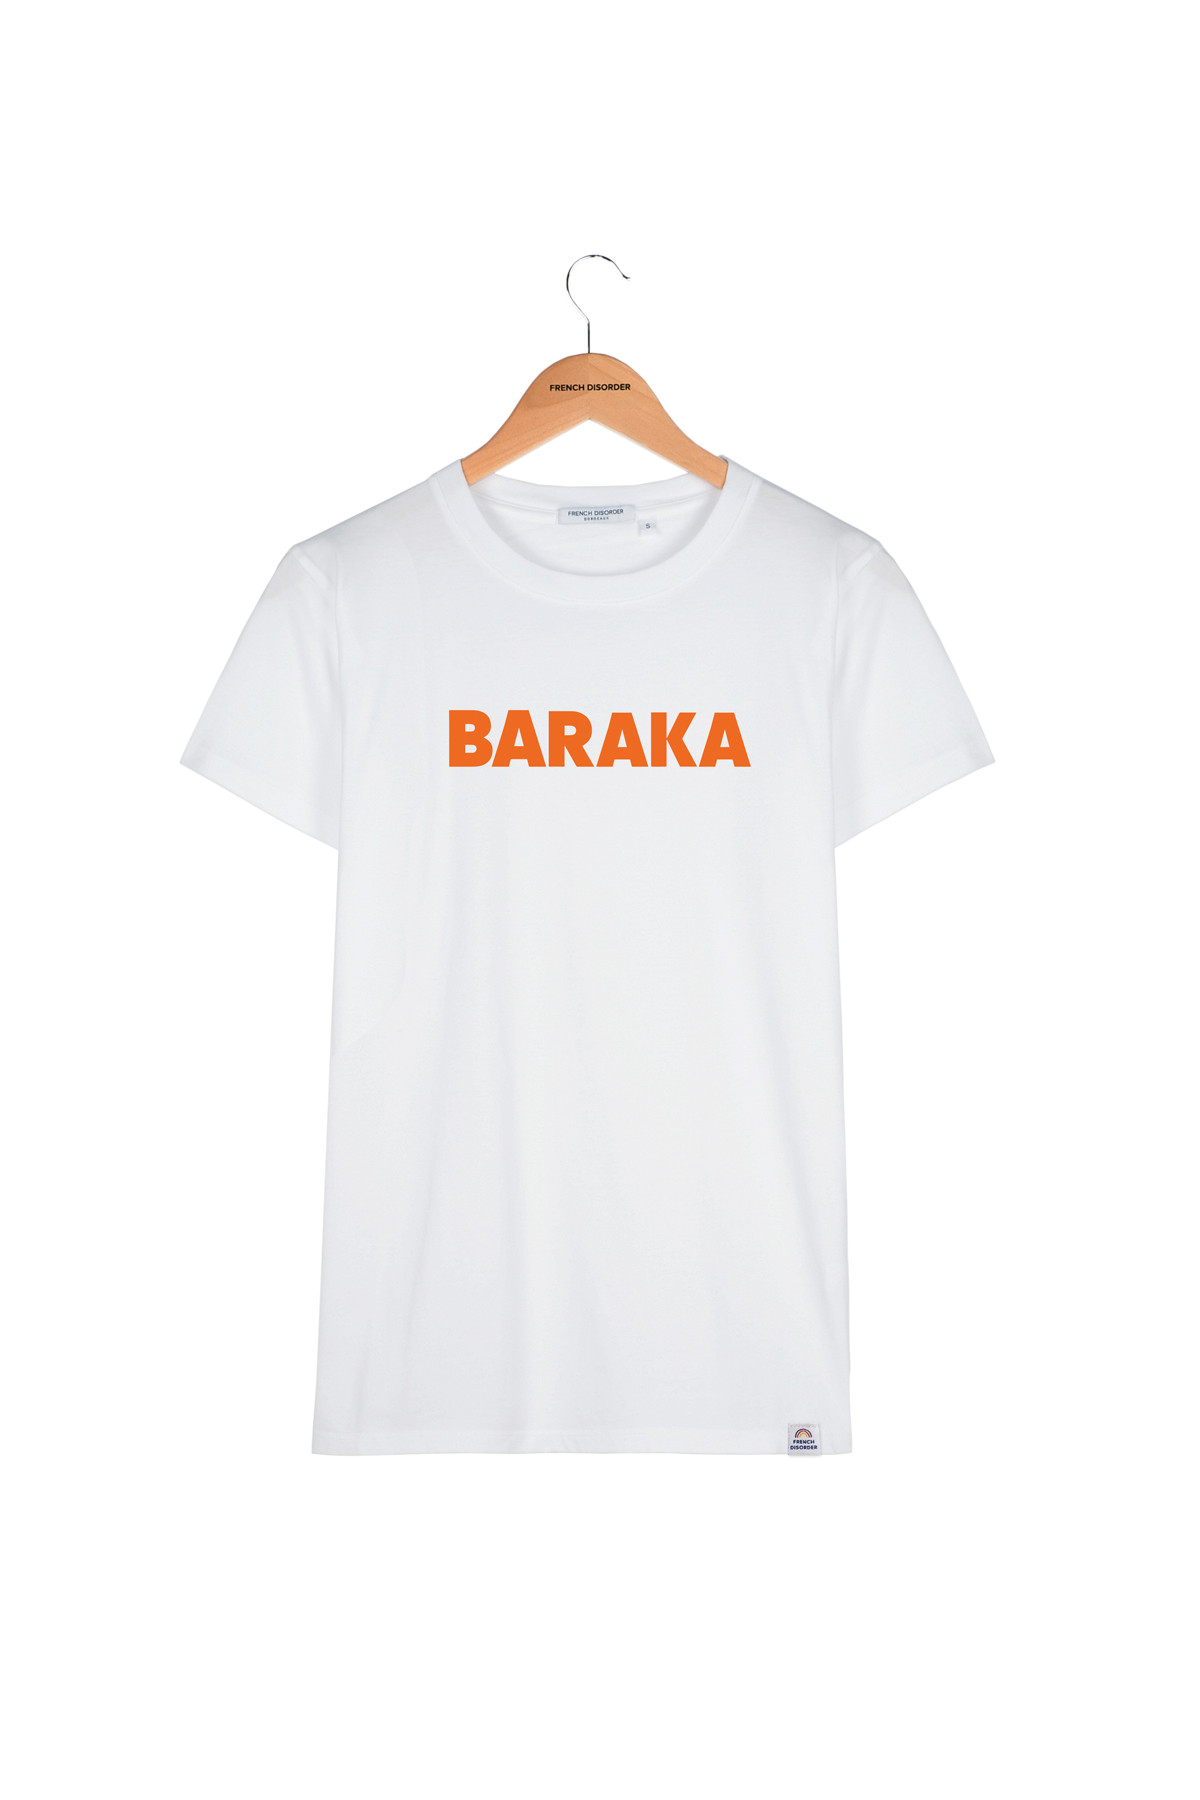 Tshirt BARAKA French Disorder